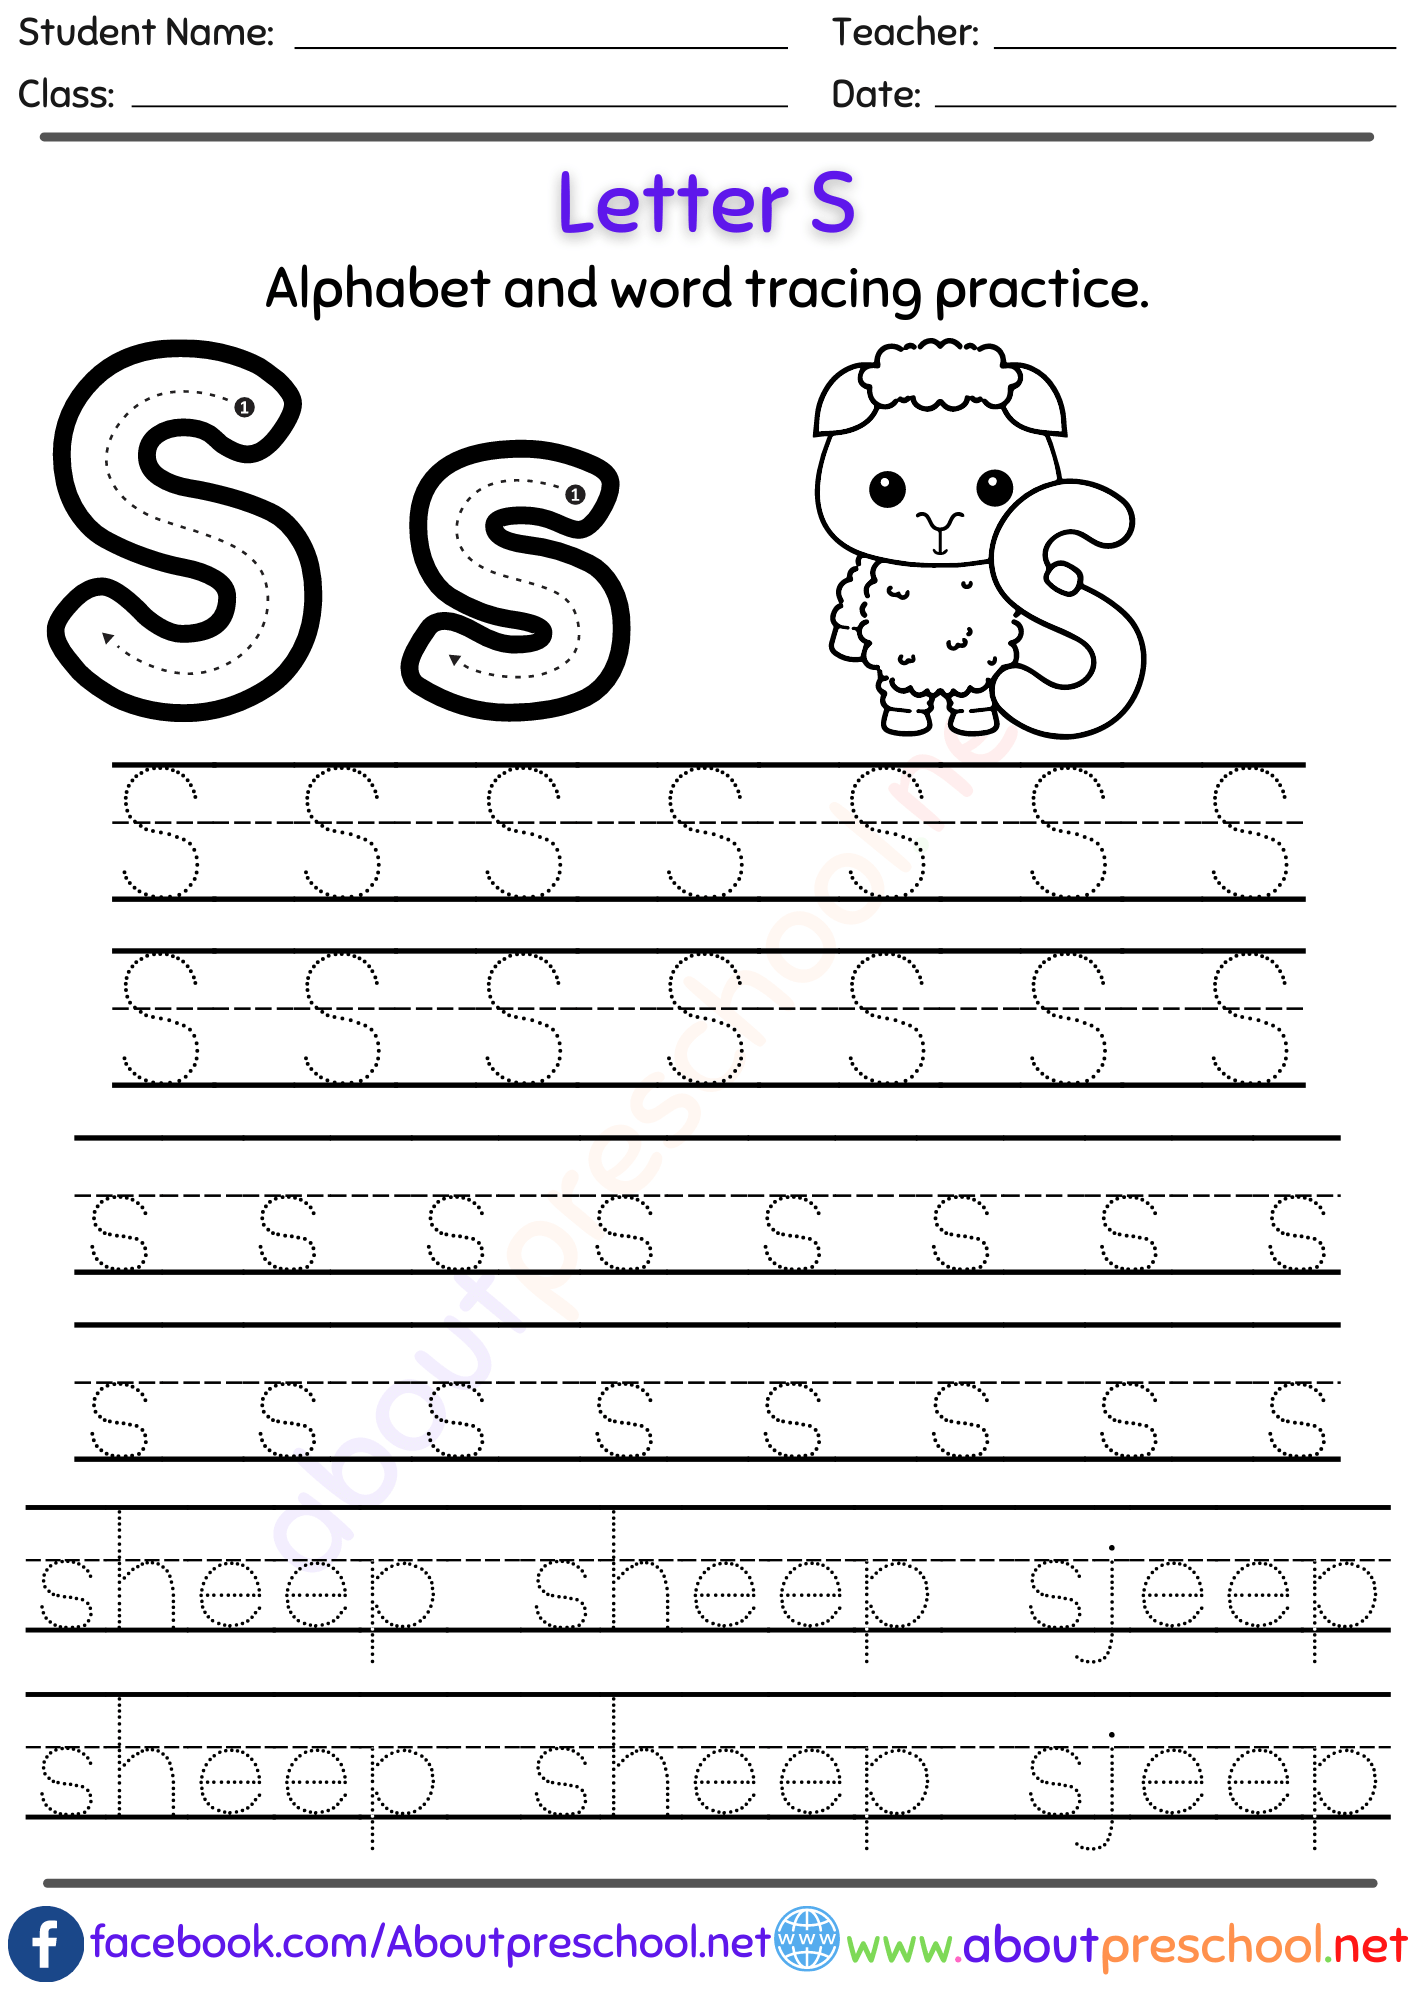 Letter S Alphabet tracing worksheets